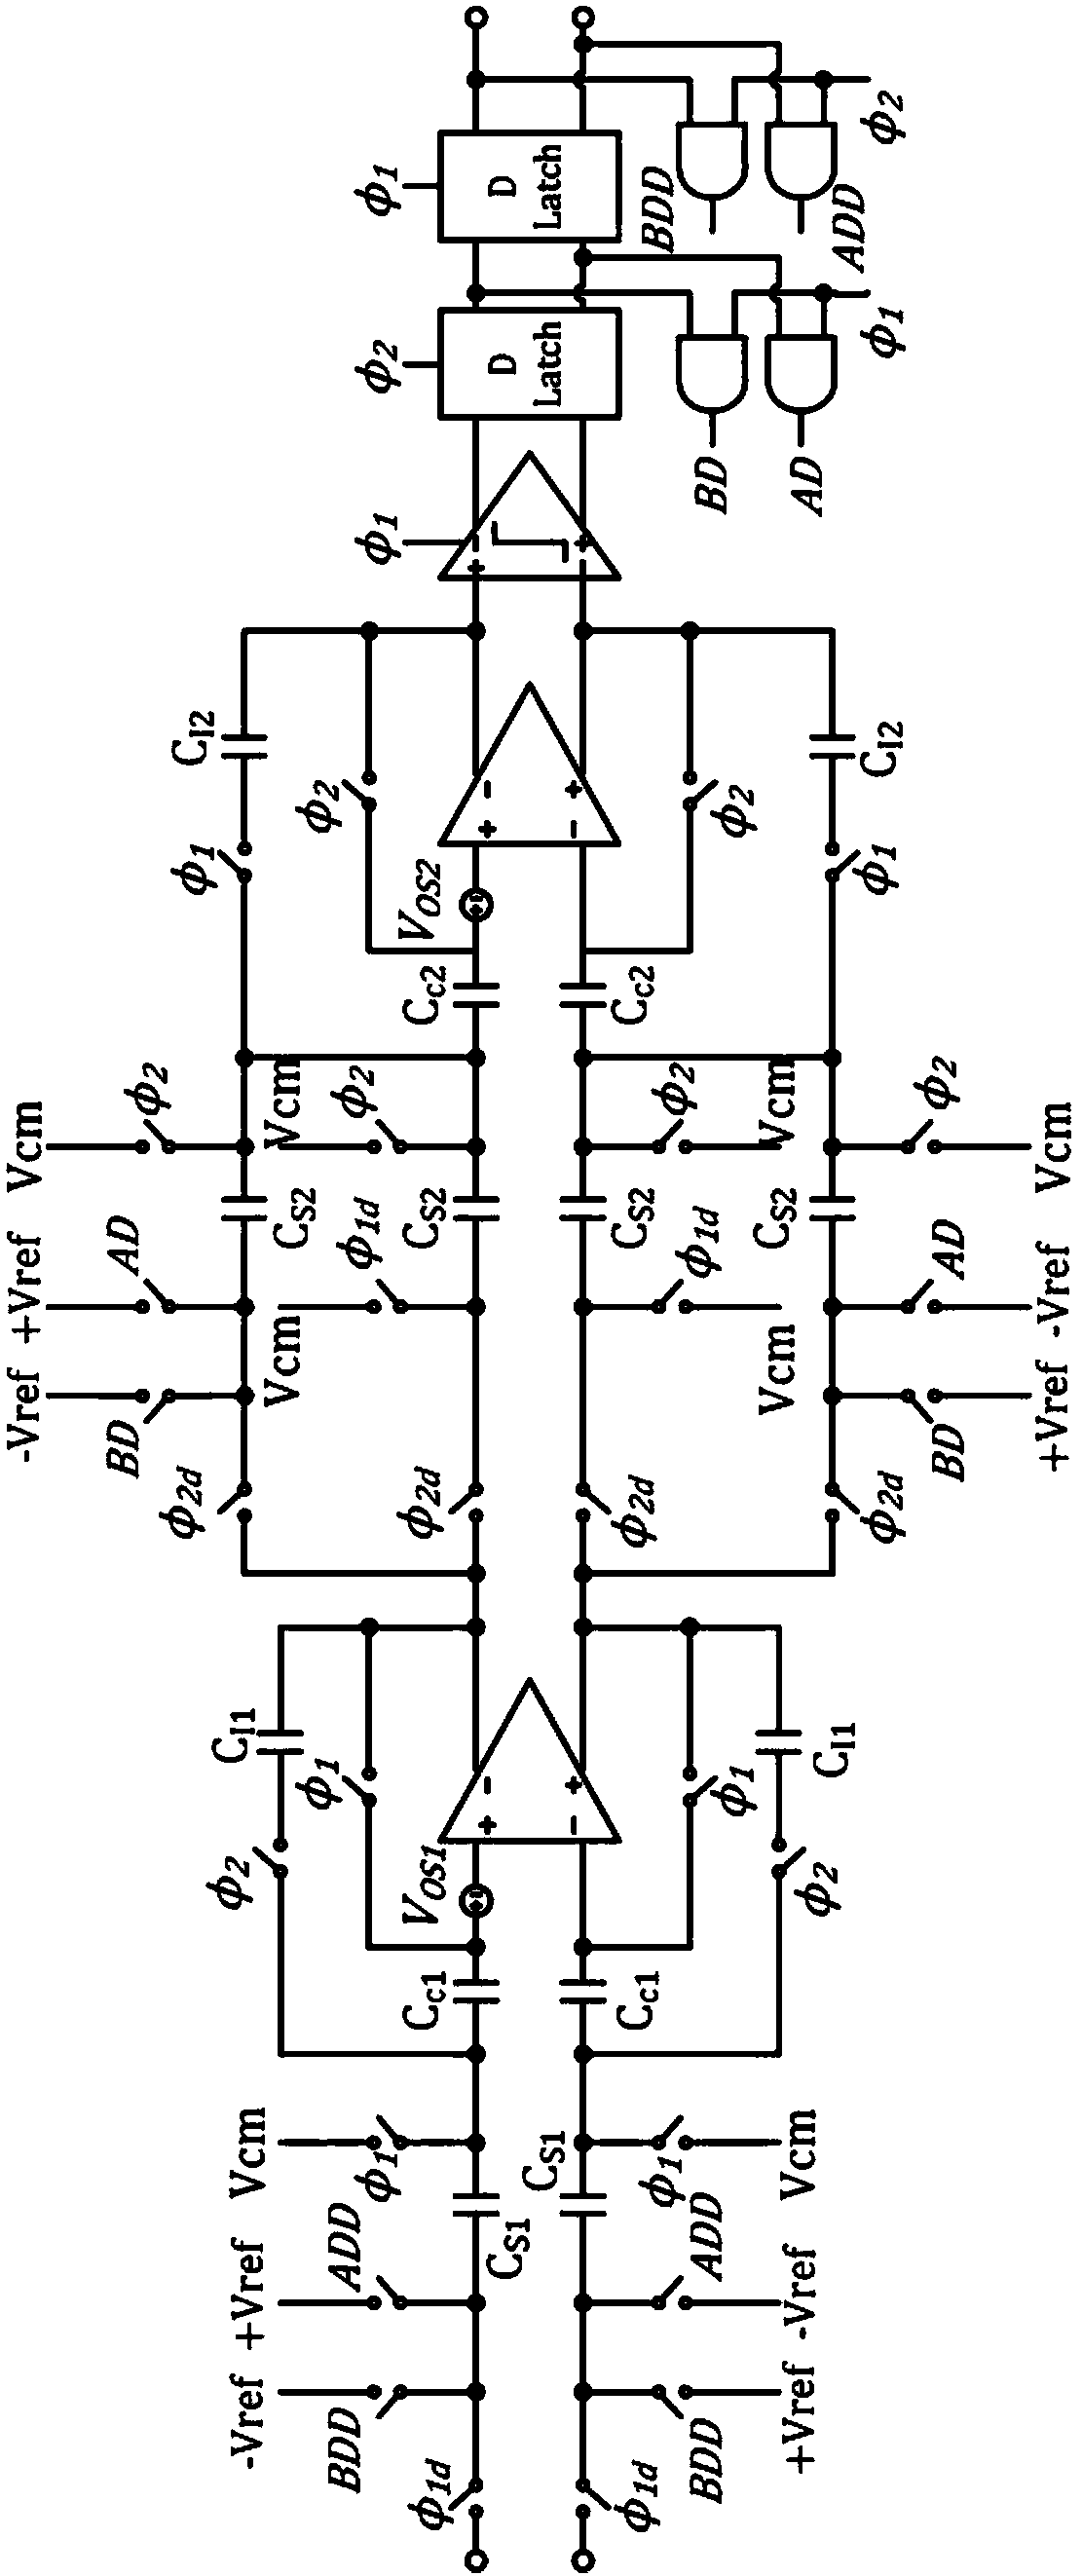 An all-digital block sigma‑delta modulator based on an inverter